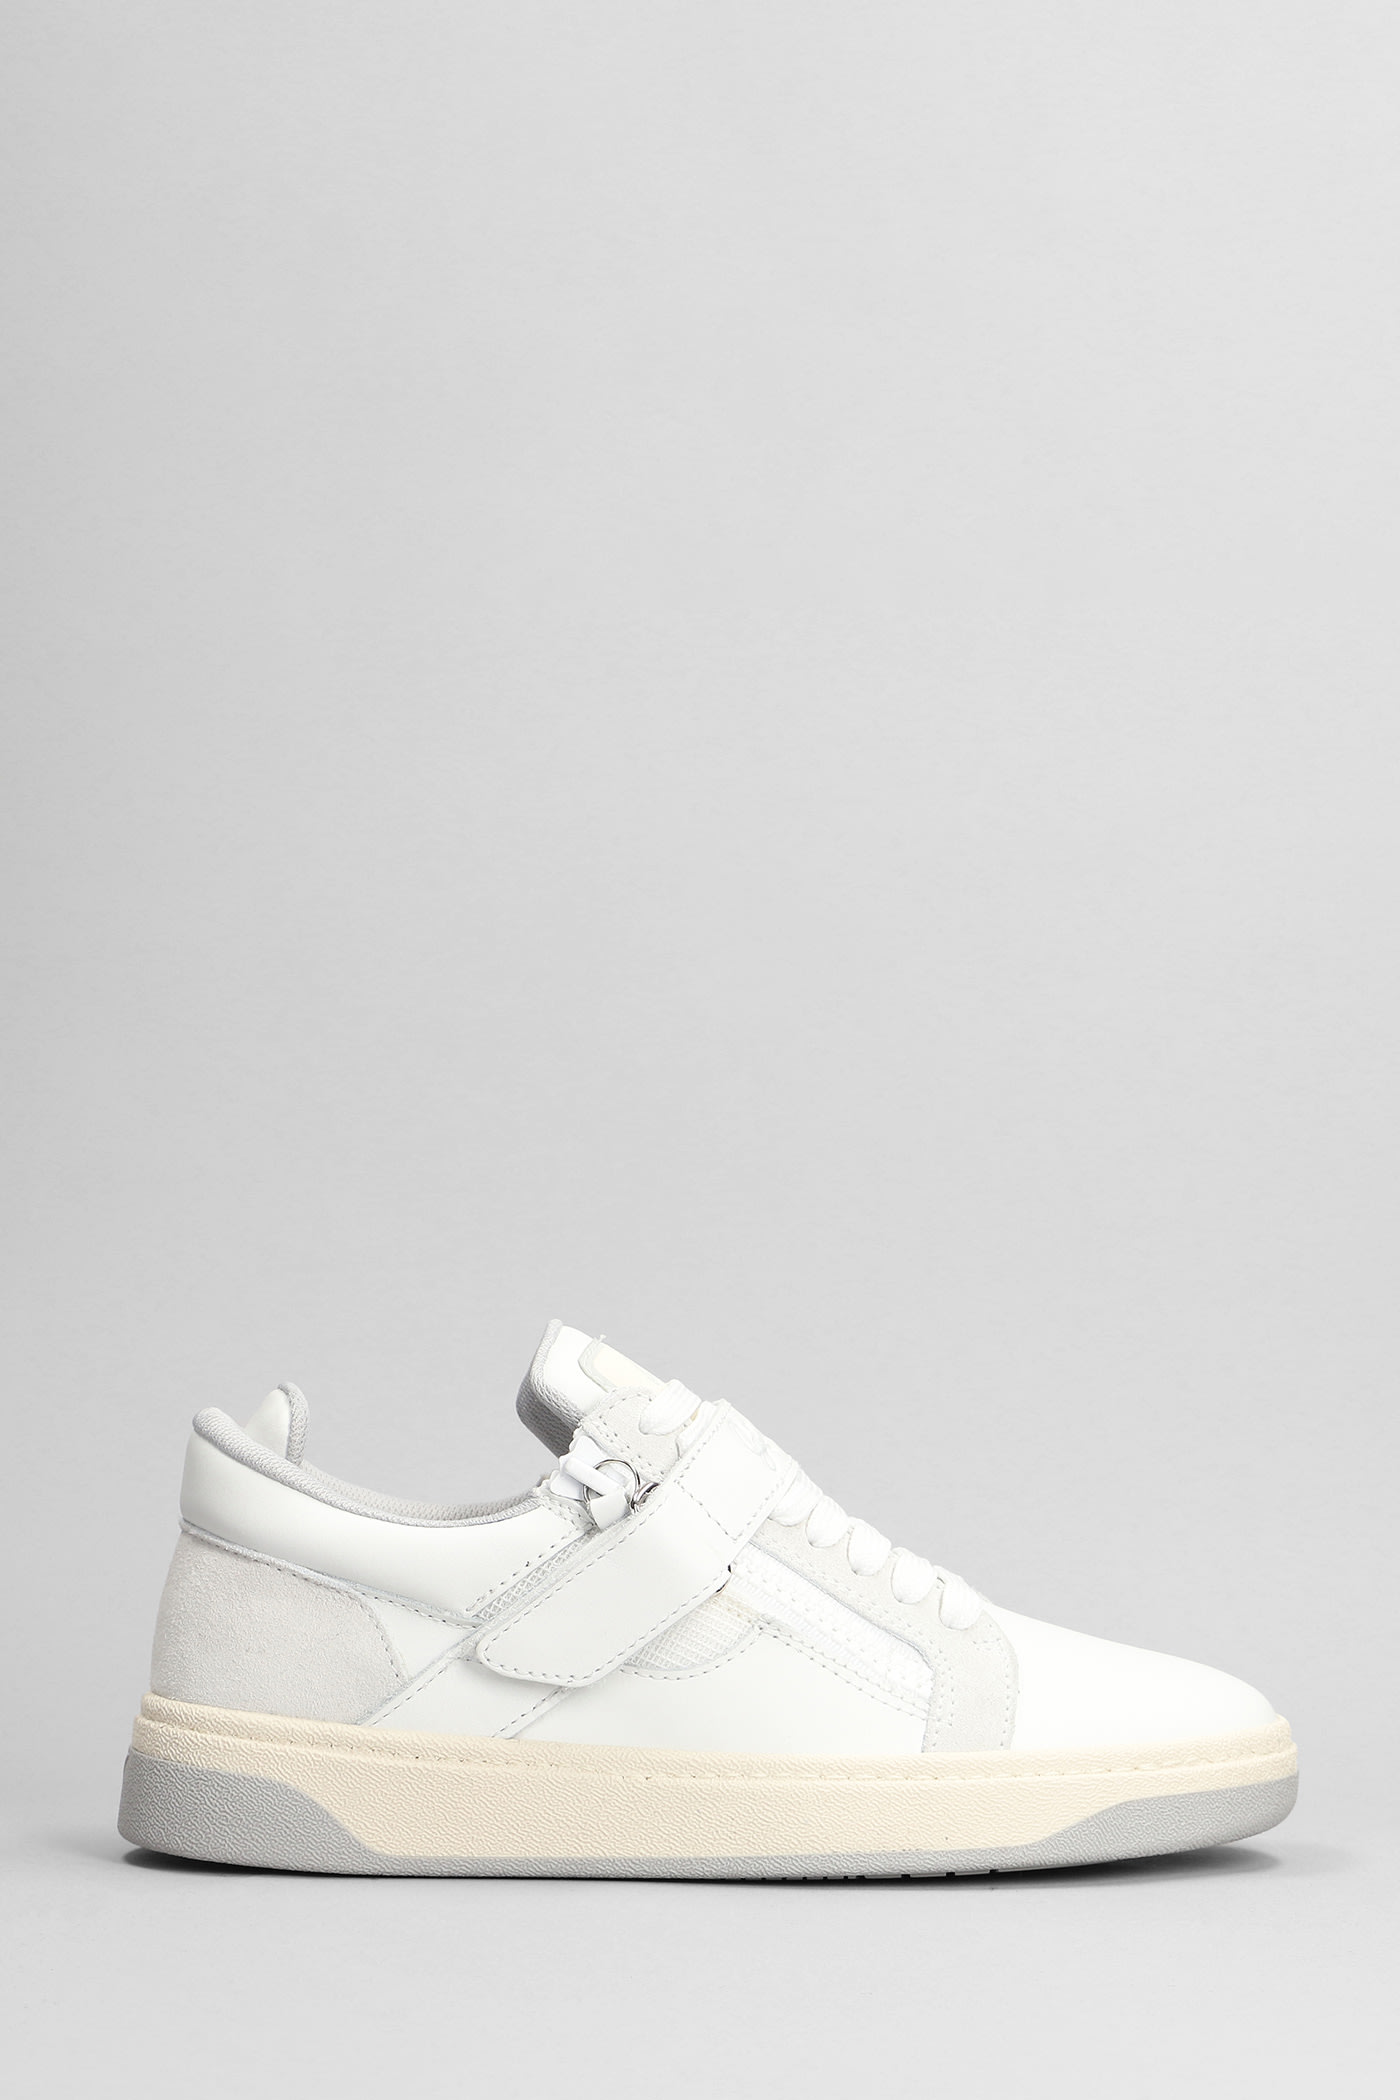 Giuseppe Zanotti Gz94 Sneakers In White Leather